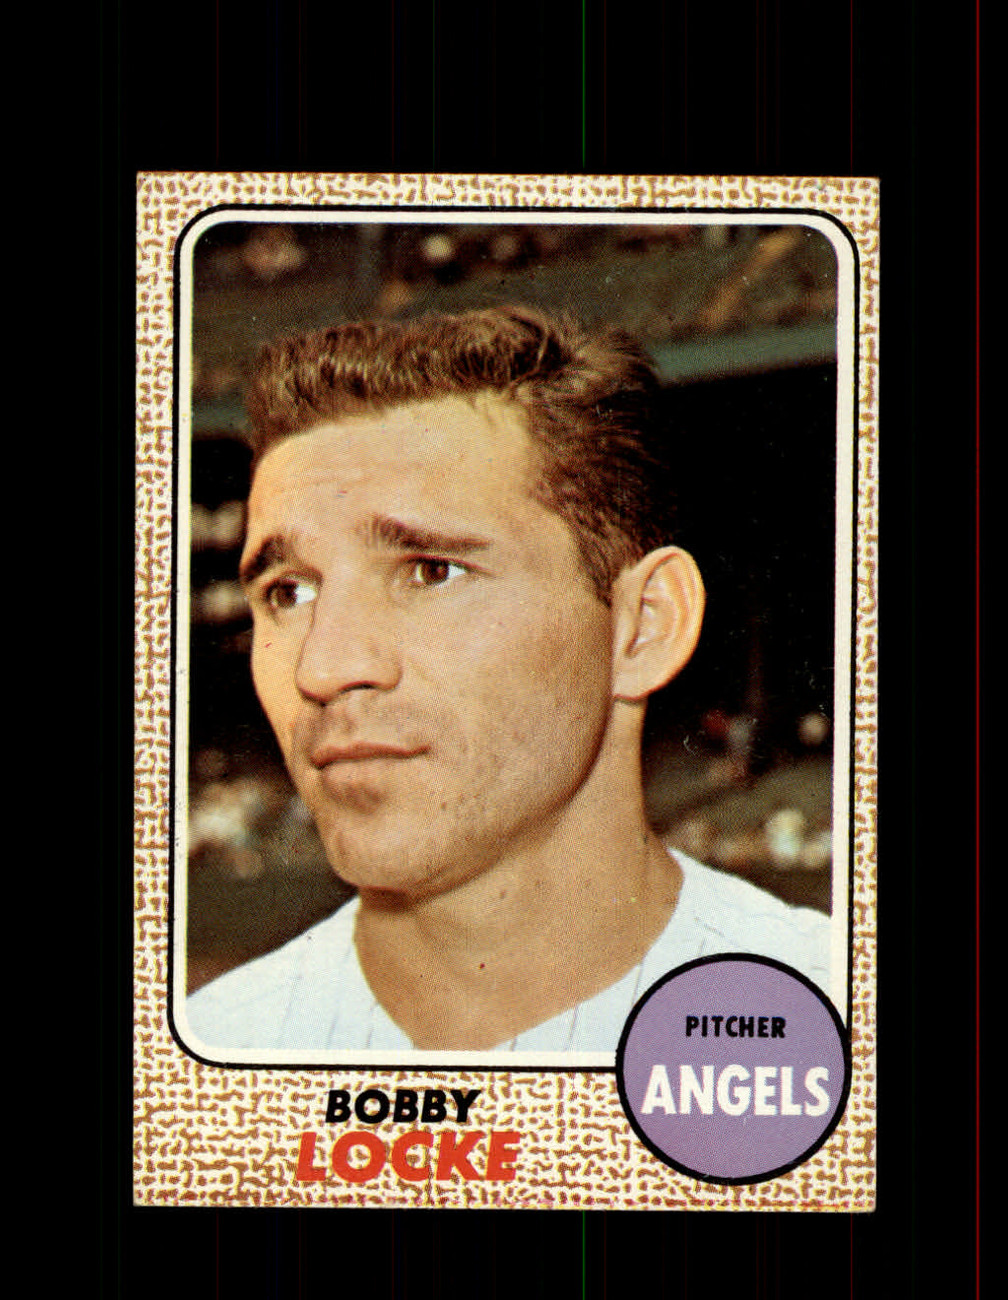 1968 BOBBY LOCKE TOPPS #24 ANGELS *R4550